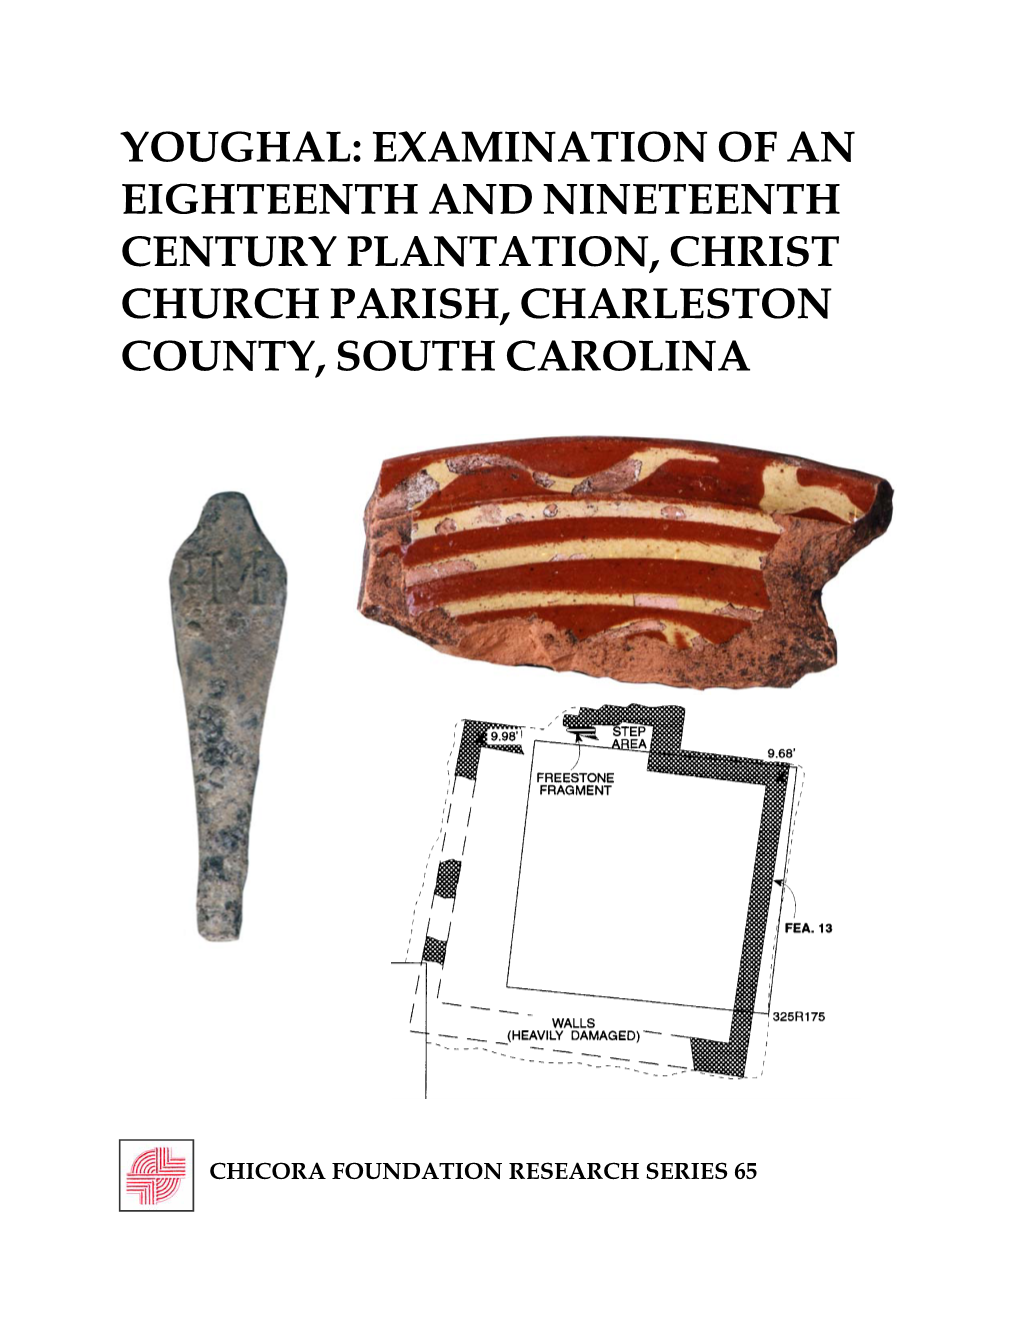 Examination of an Eighteenth and Nineteenth Century Plantation, Christ Church Parish, Charleston County, South Carolina